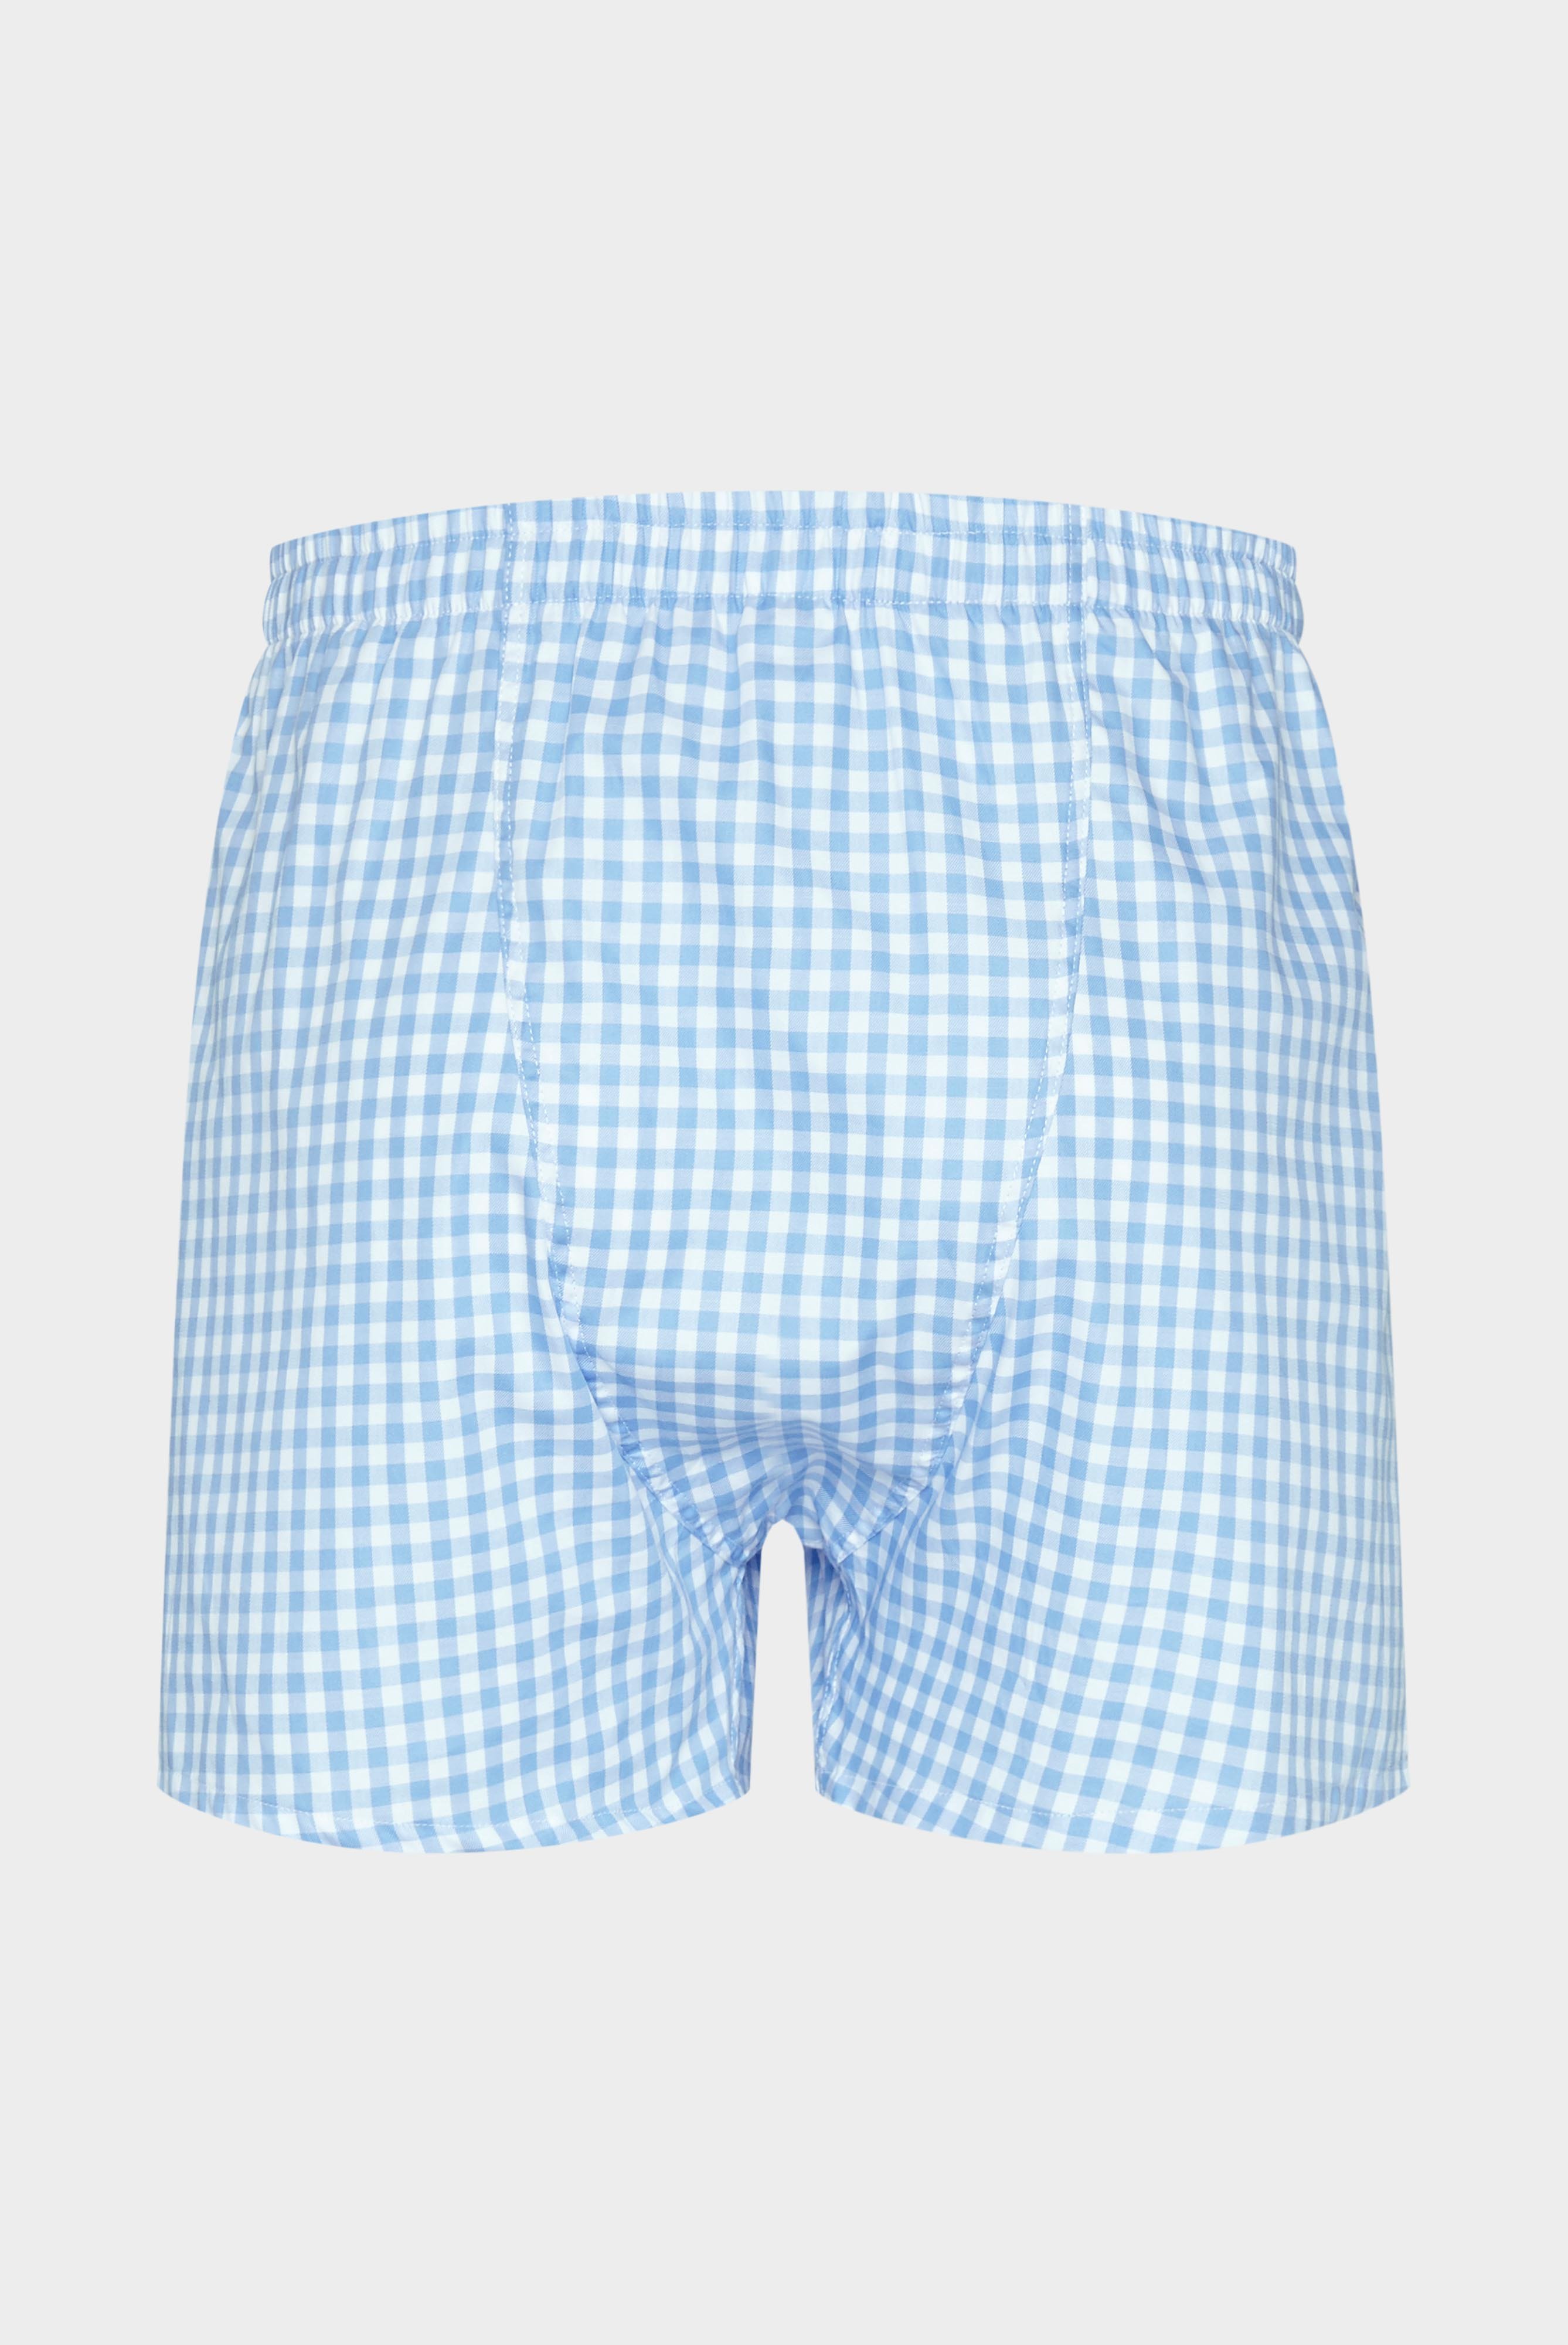 Underwear+Checked Cotton Twill Boxer Shorts+91.1100..152291.730.48